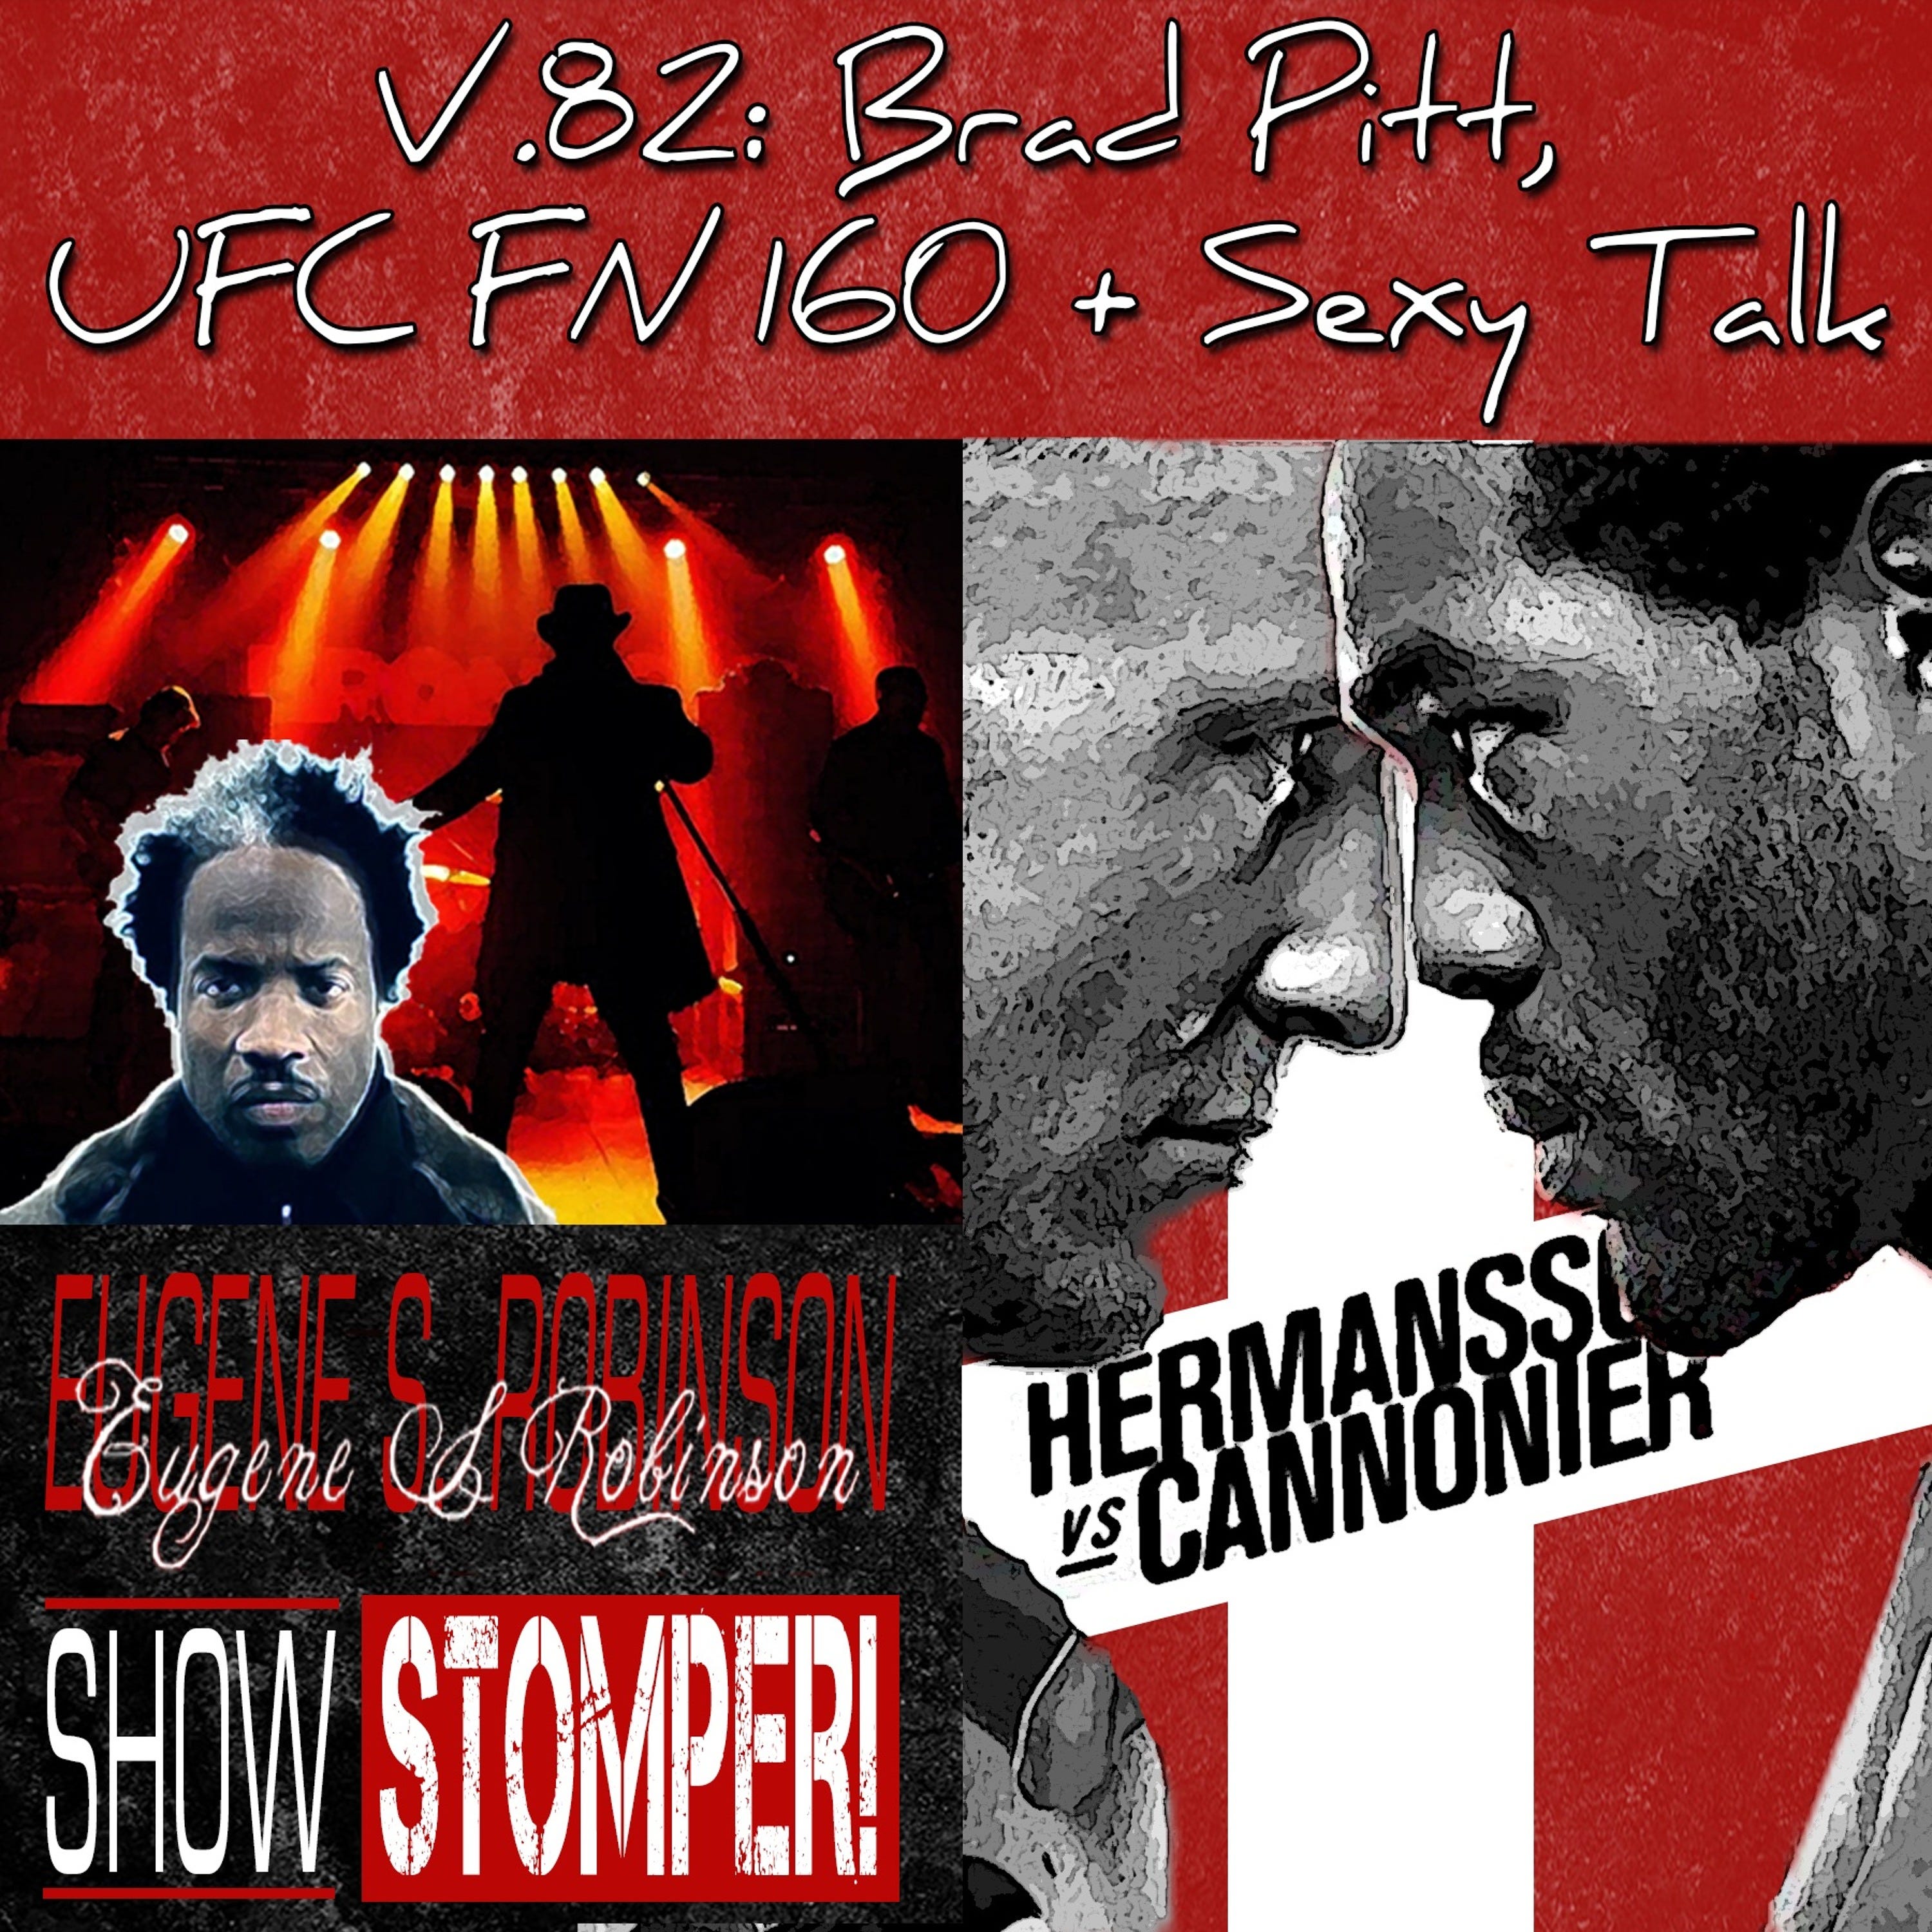 V.82: Brad Pitt, UFC FN 160 + Sexy Talk On The Eugene S. Robinson Show Stomper!